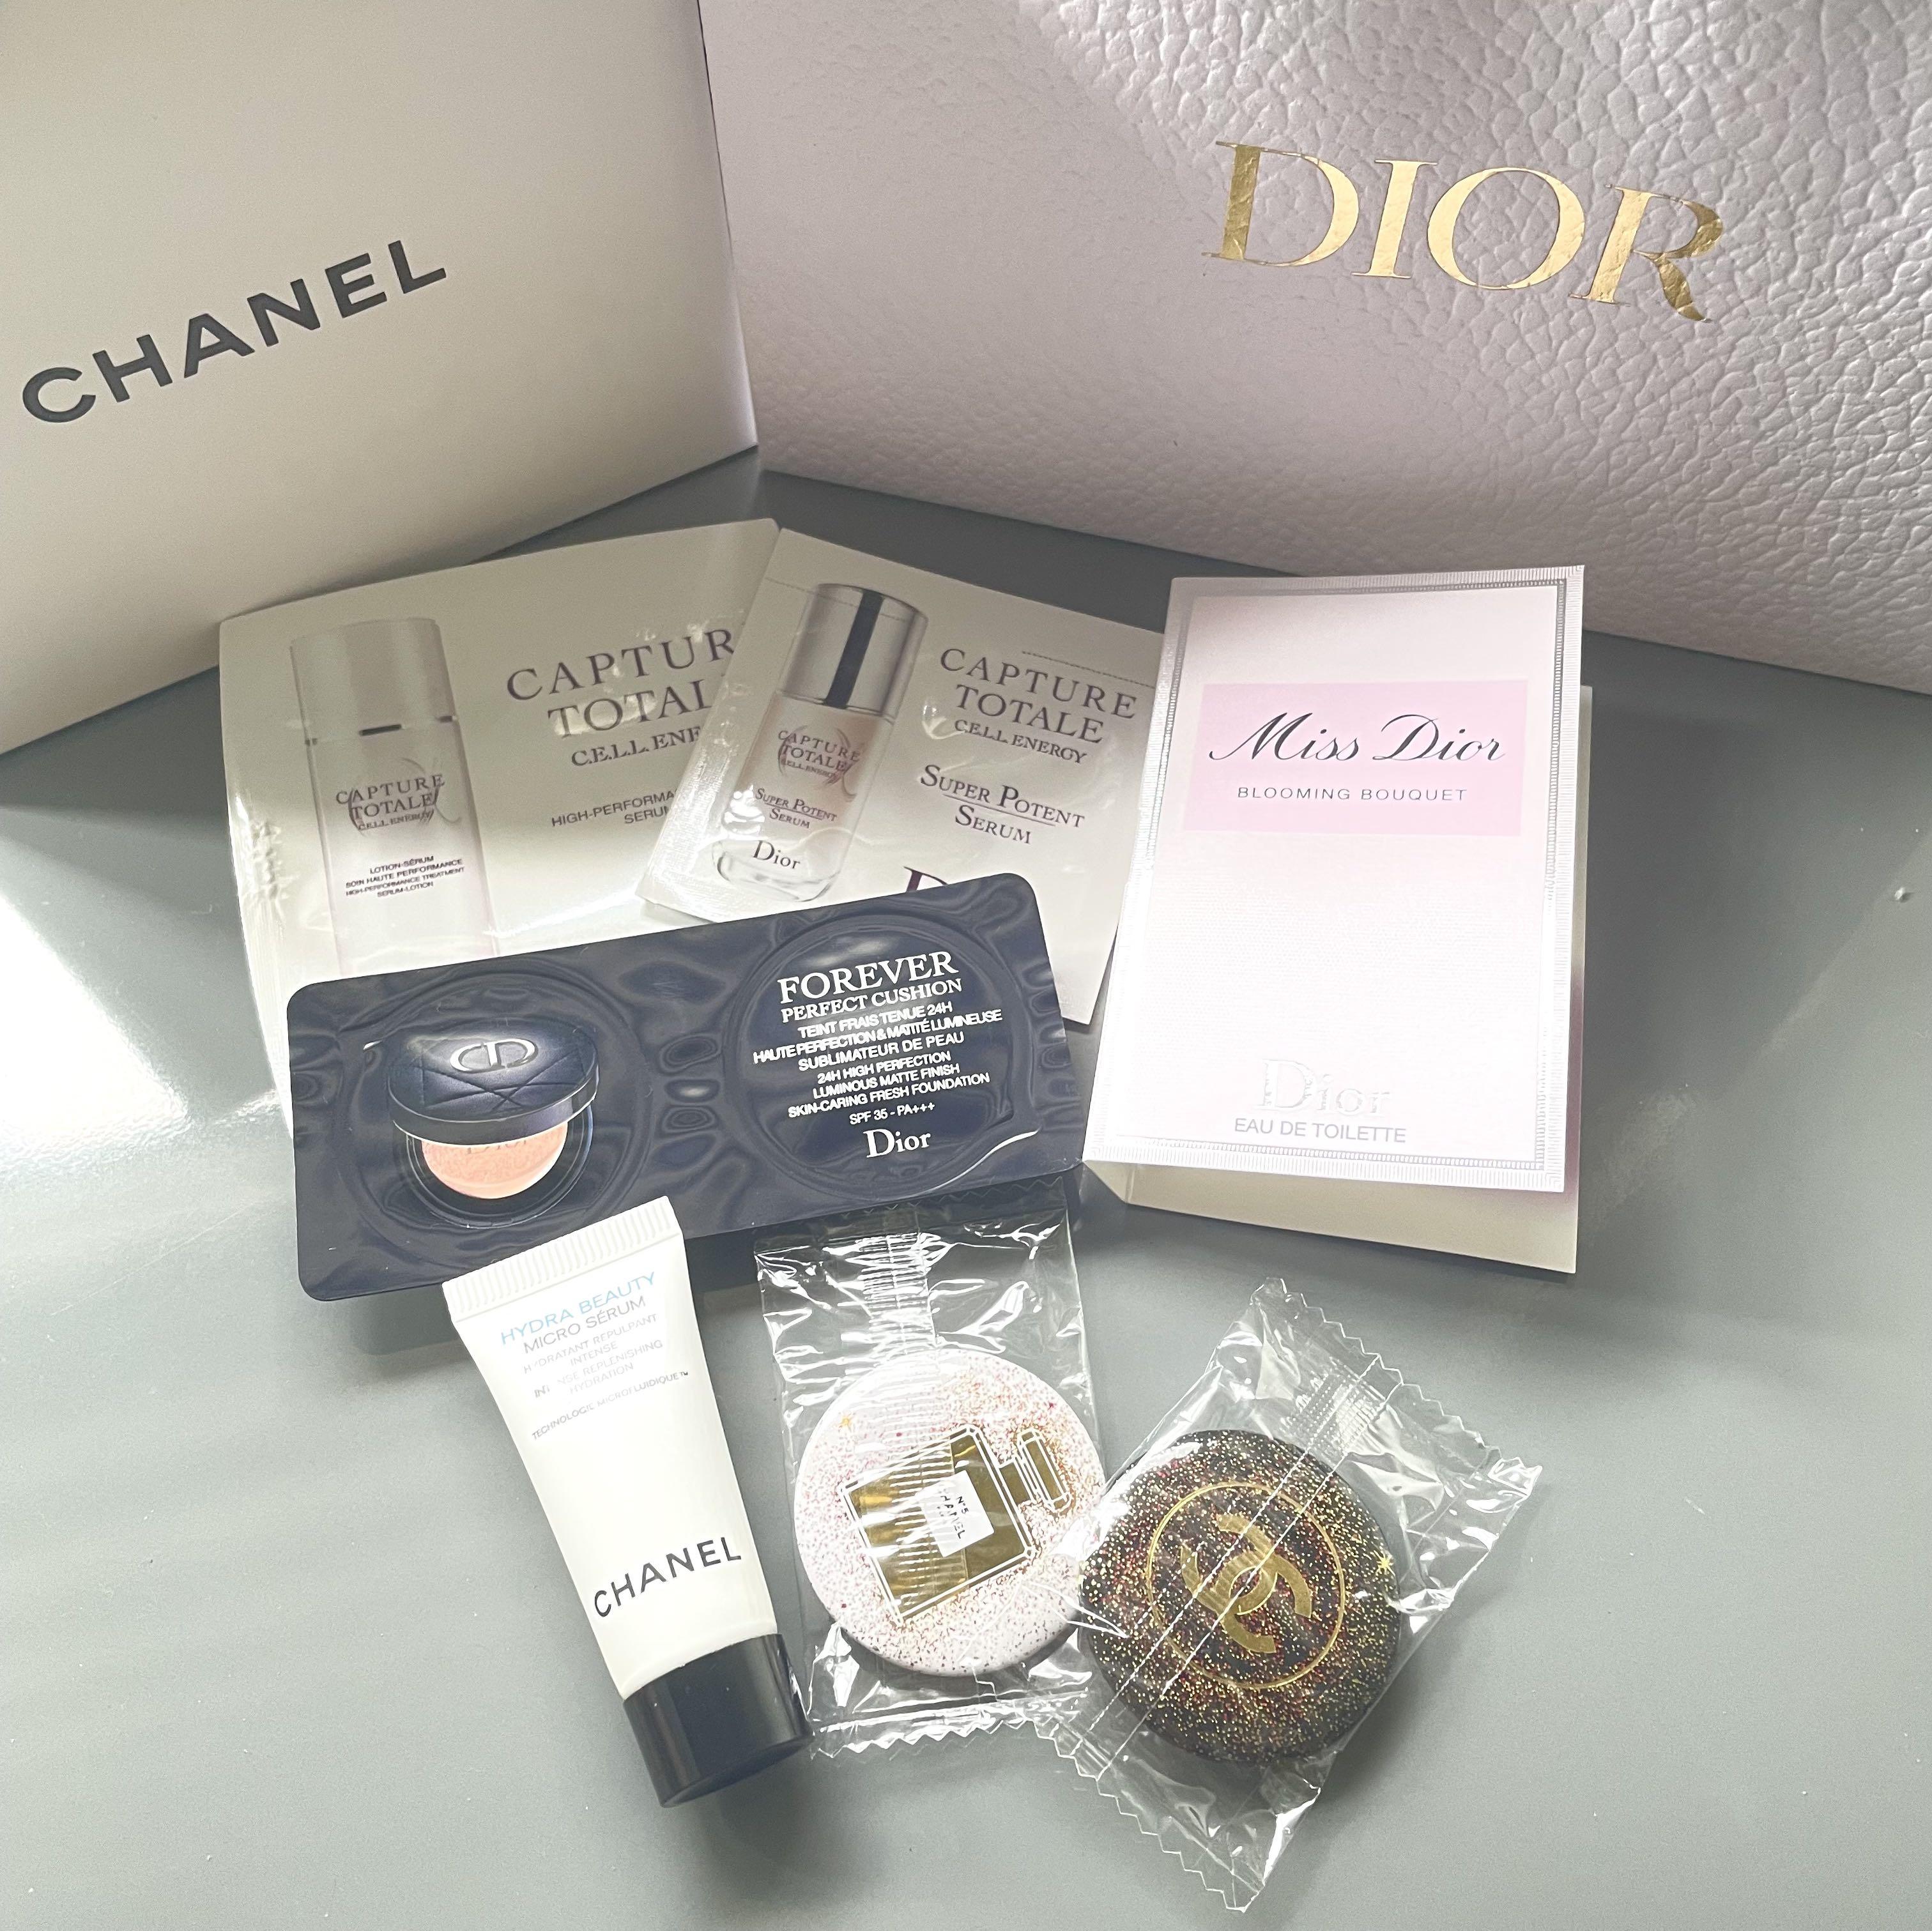 BNIB: Chanel No. 5 Eau De Parfum - Red Edition, Beauty & Personal Care,  Fragrance & Deodorants on Carousell